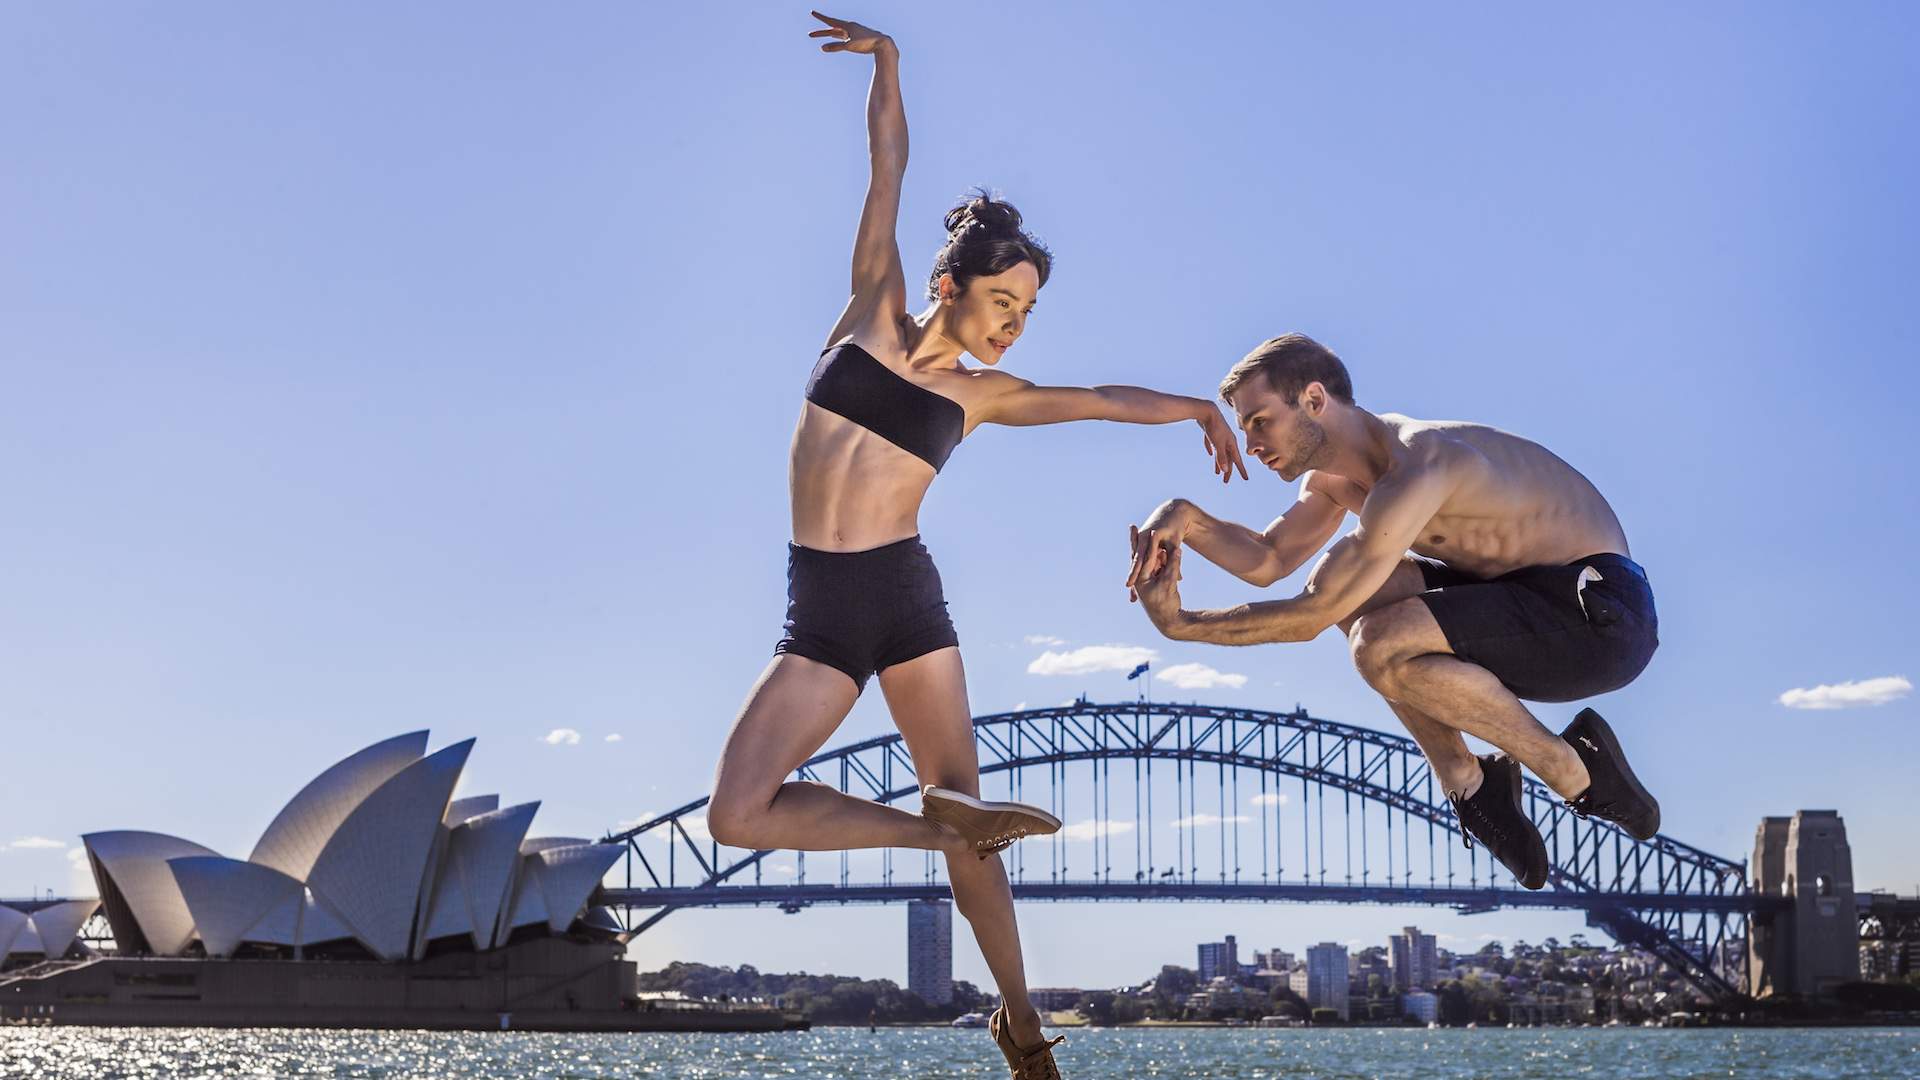 Gallery: Sydney Dance Company and Sydney's City Art Celebrate Dance and Public Art